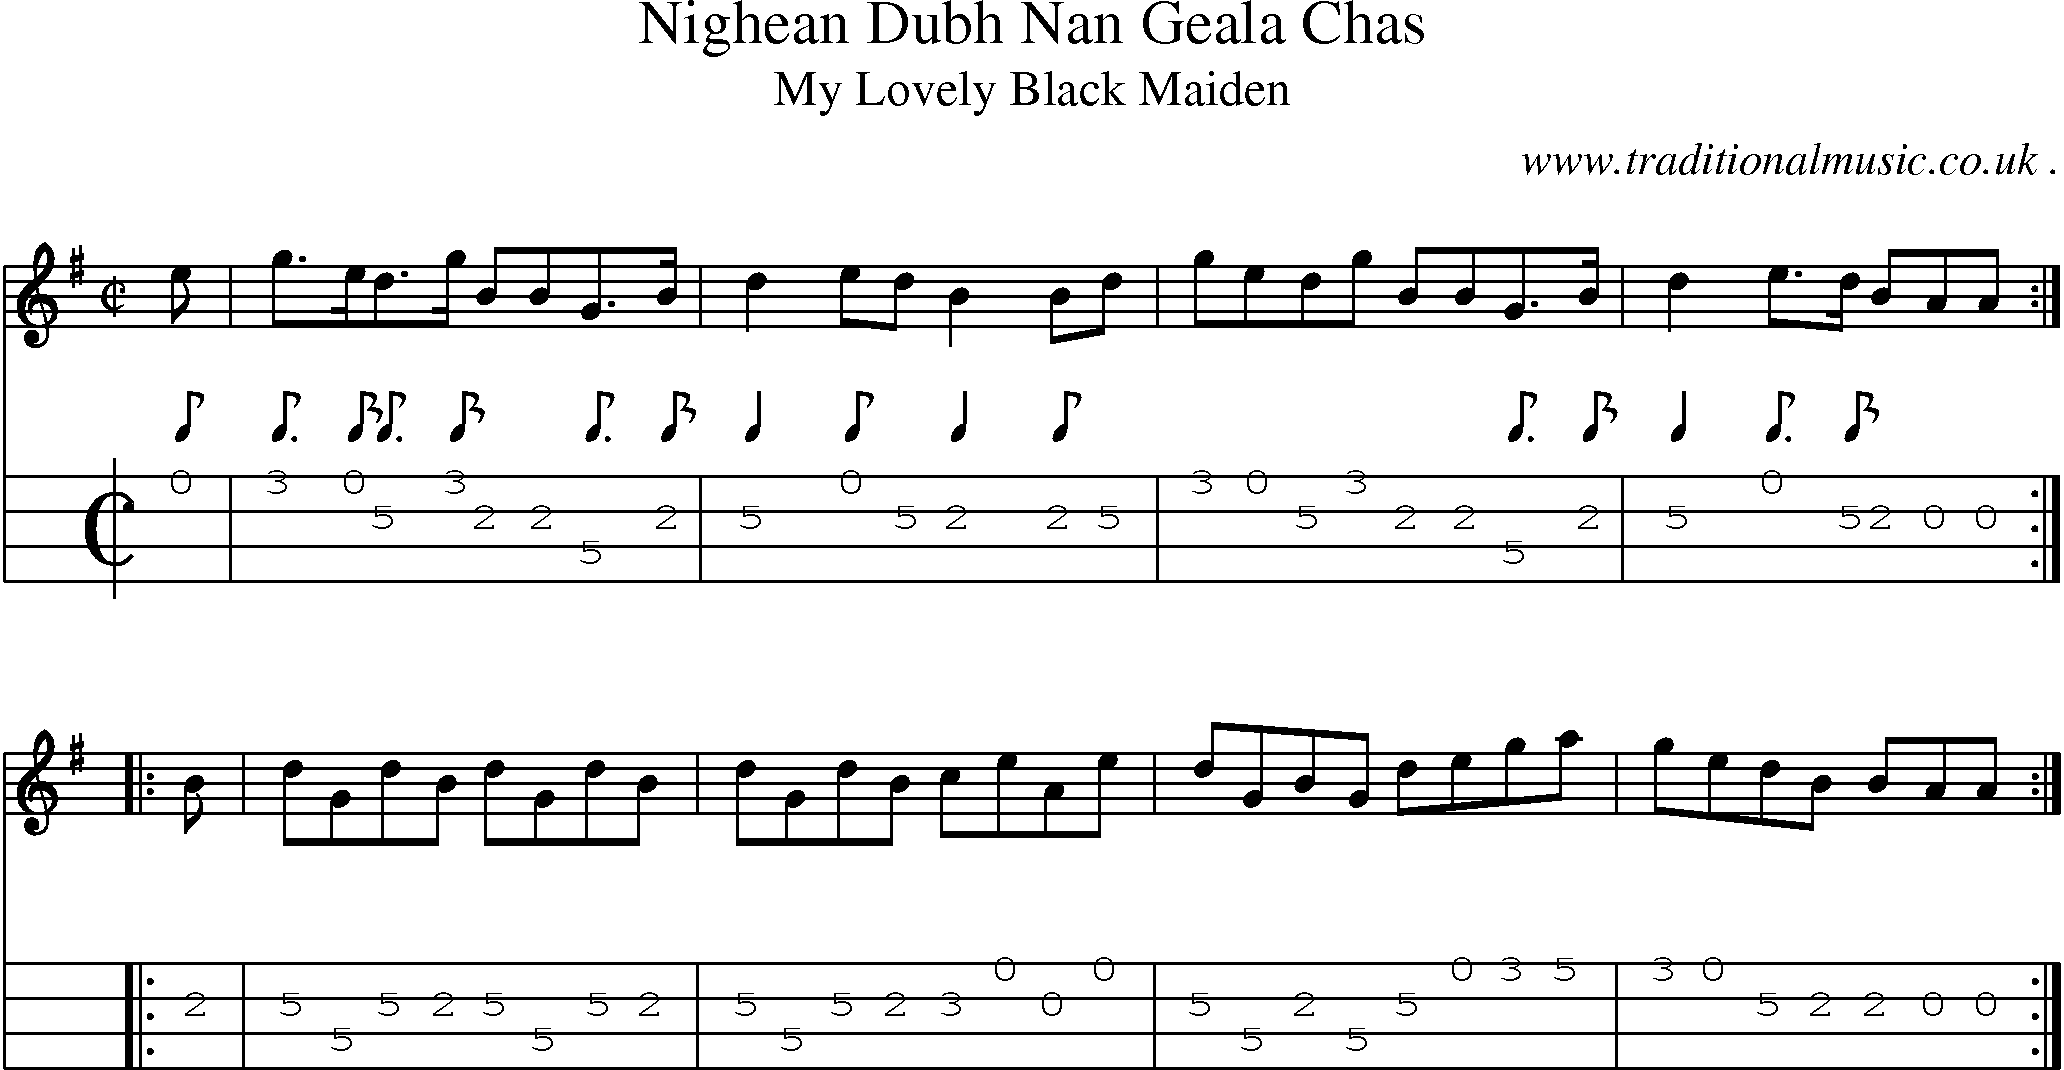 Sheet-music  score, Chords and Mandolin Tabs for Nighean Dubh Nan Geala Chas